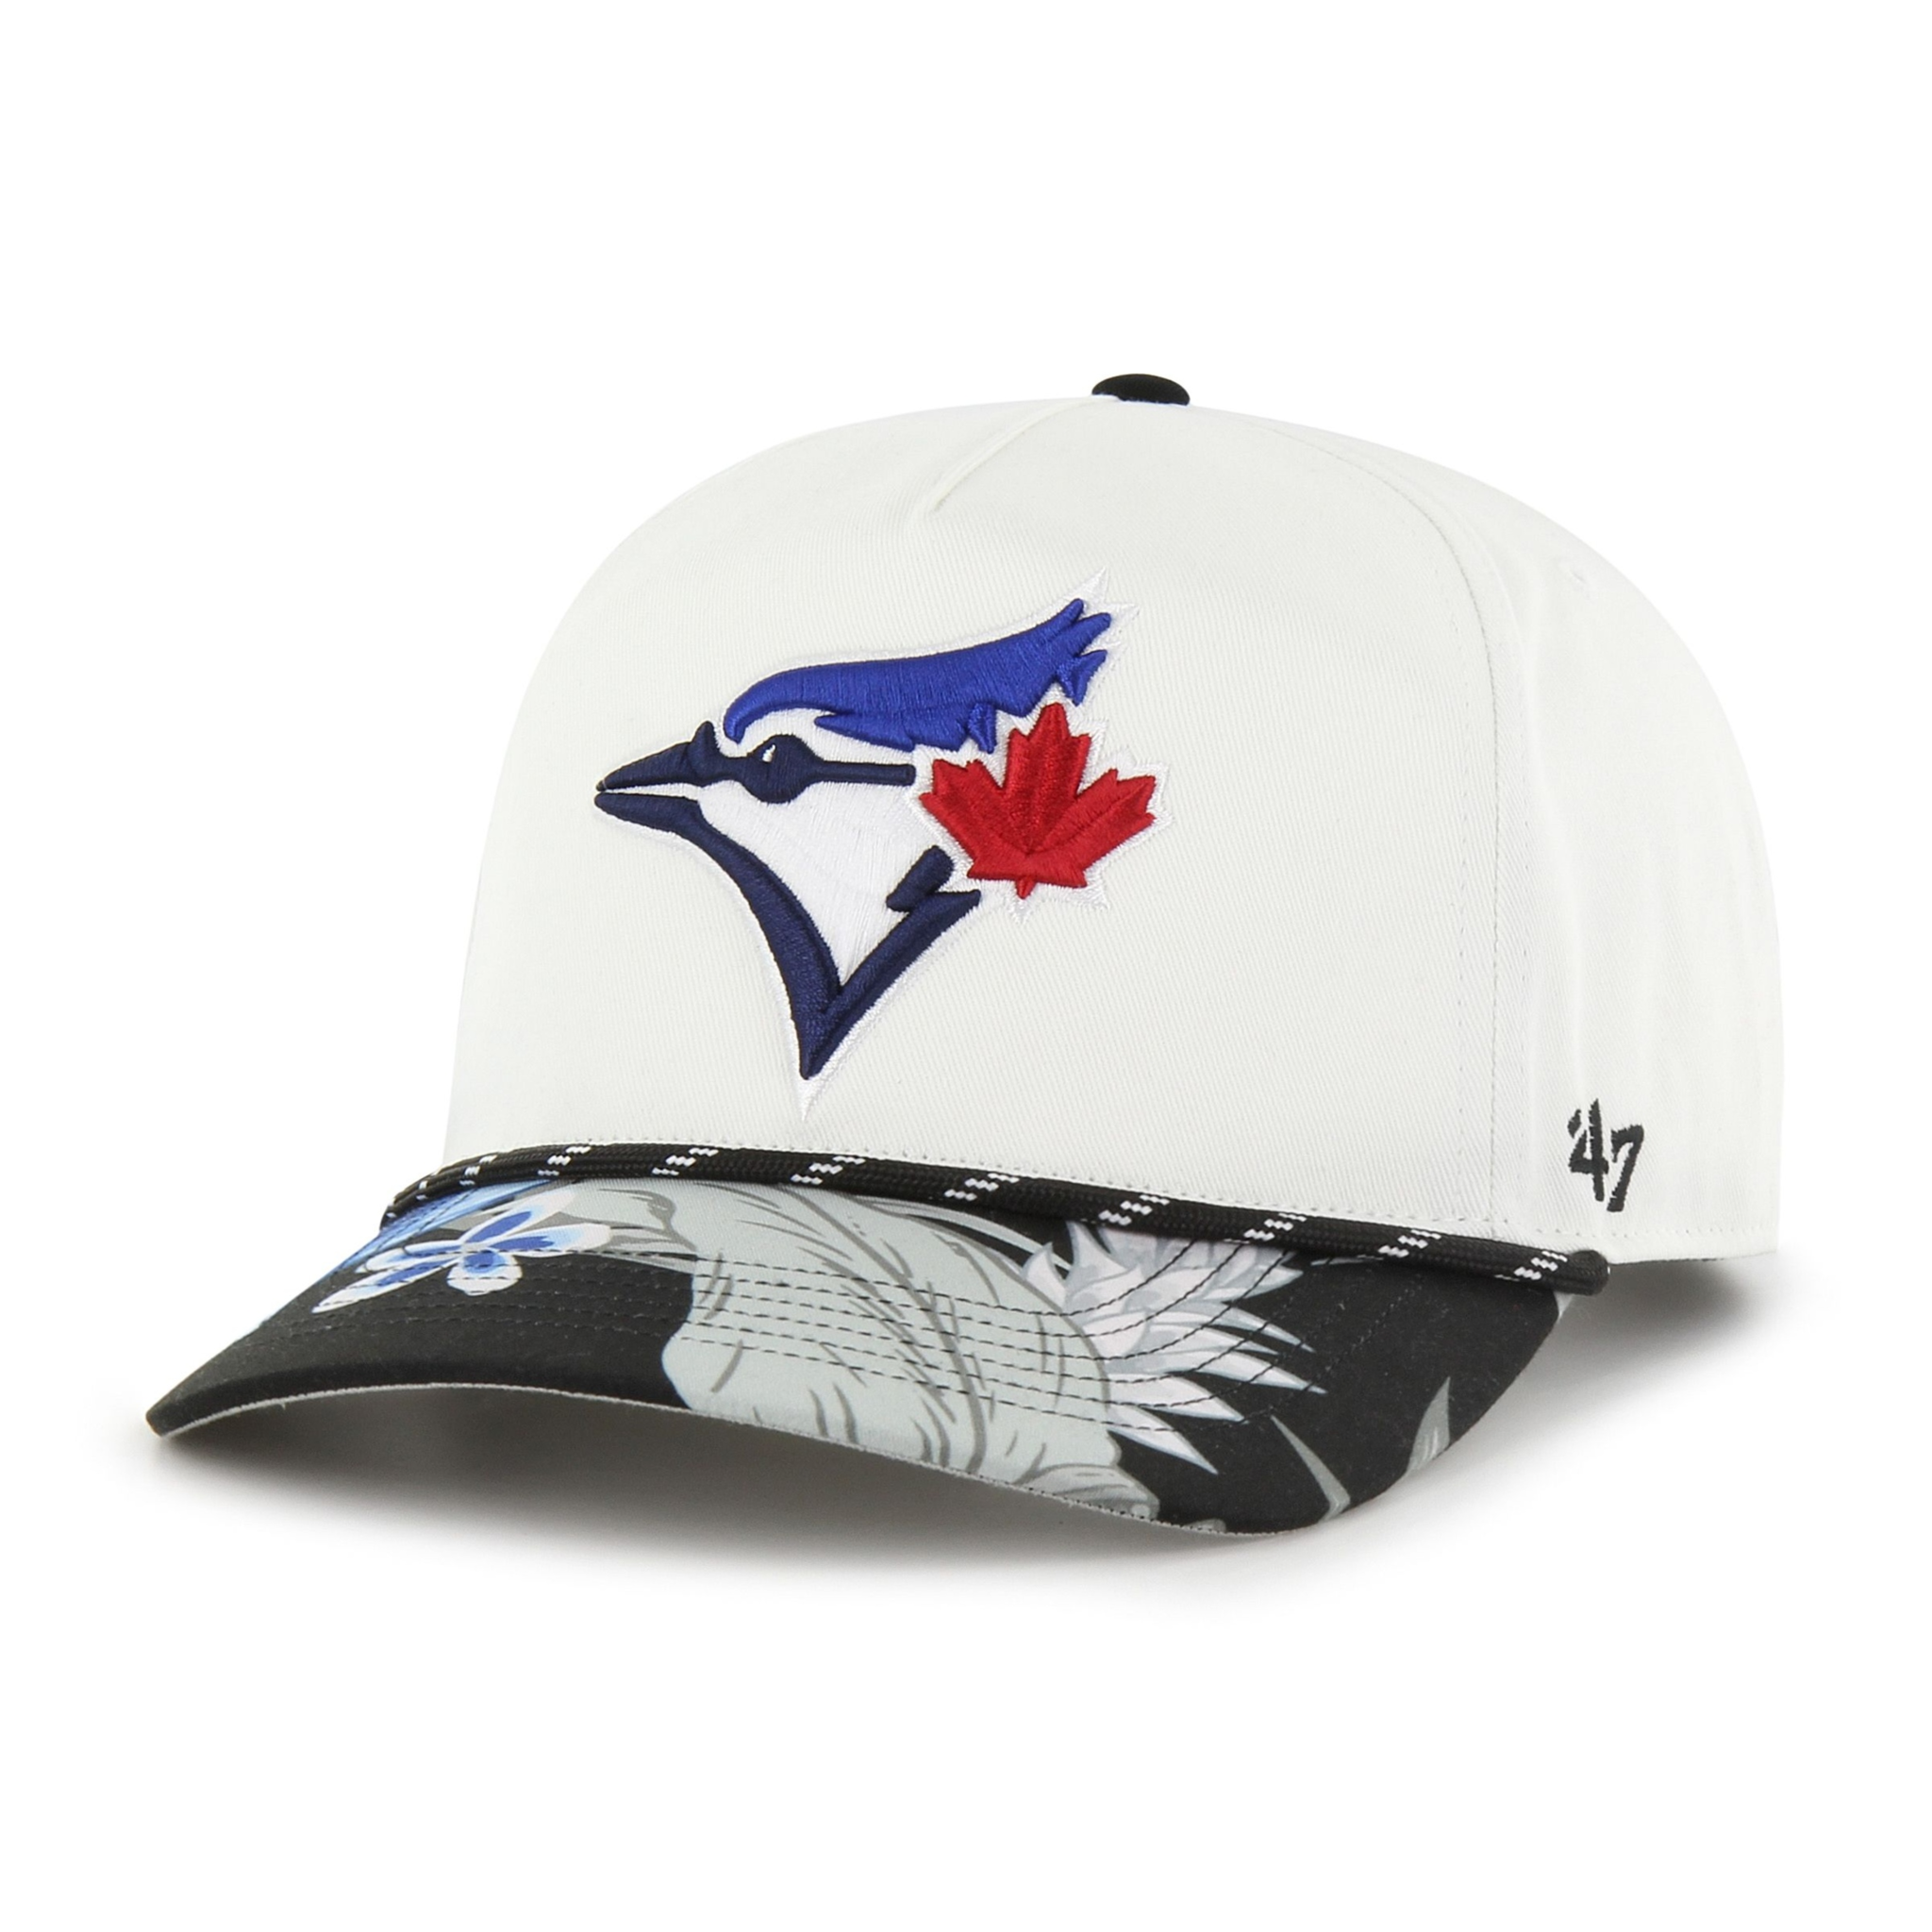 MLB '47 Brand Dark Tropic Hitch Cap - Hometown Sports and Apparel